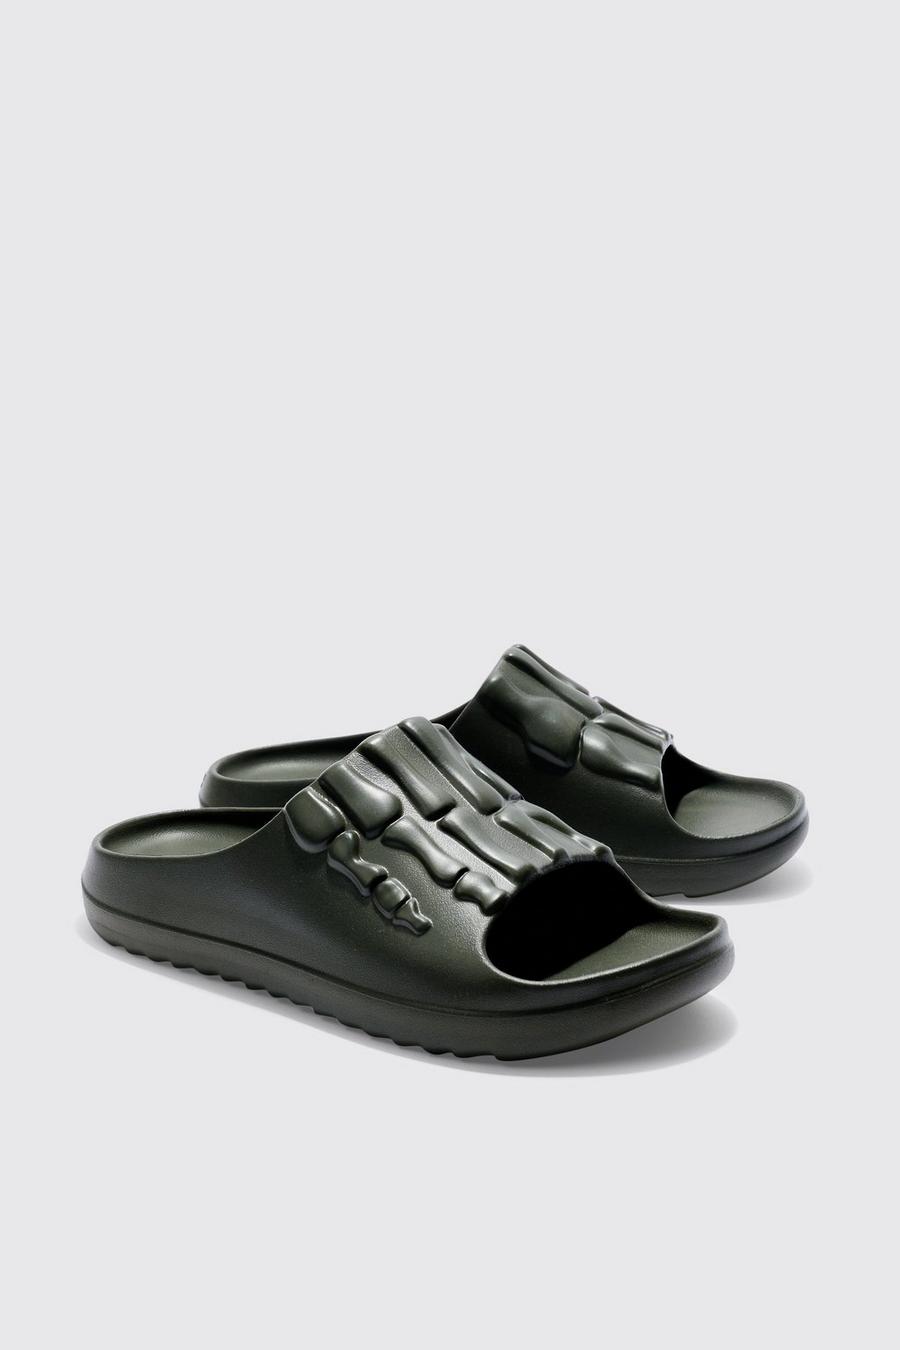 Khaki Sandals BAGHEERA Commander 86456-6 C0102 Black Dark Grey